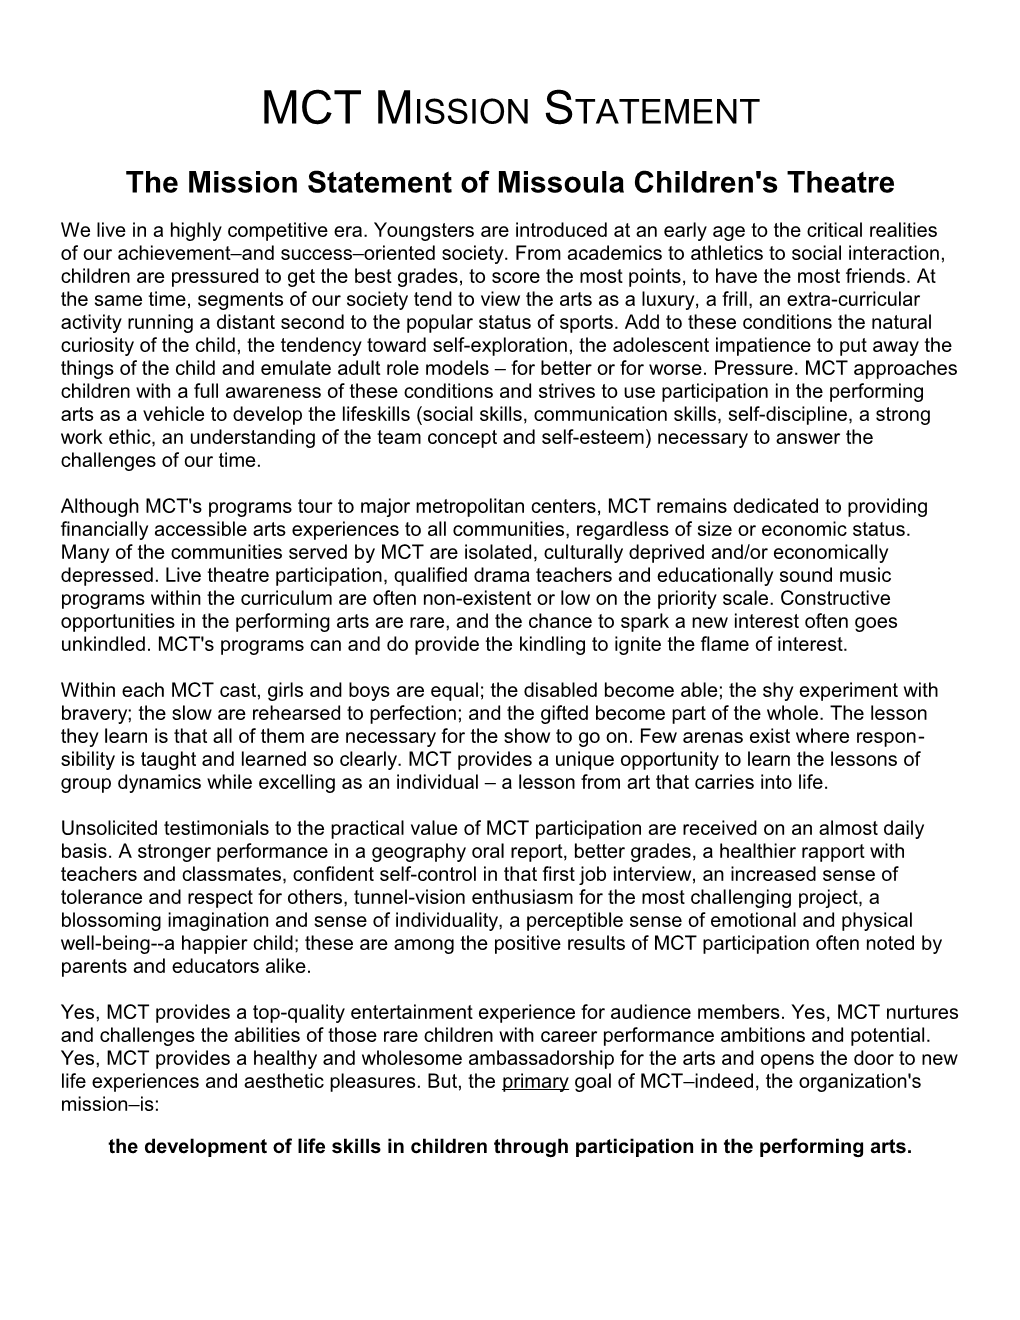 The Mission Statement of Missoula Children's Theatre